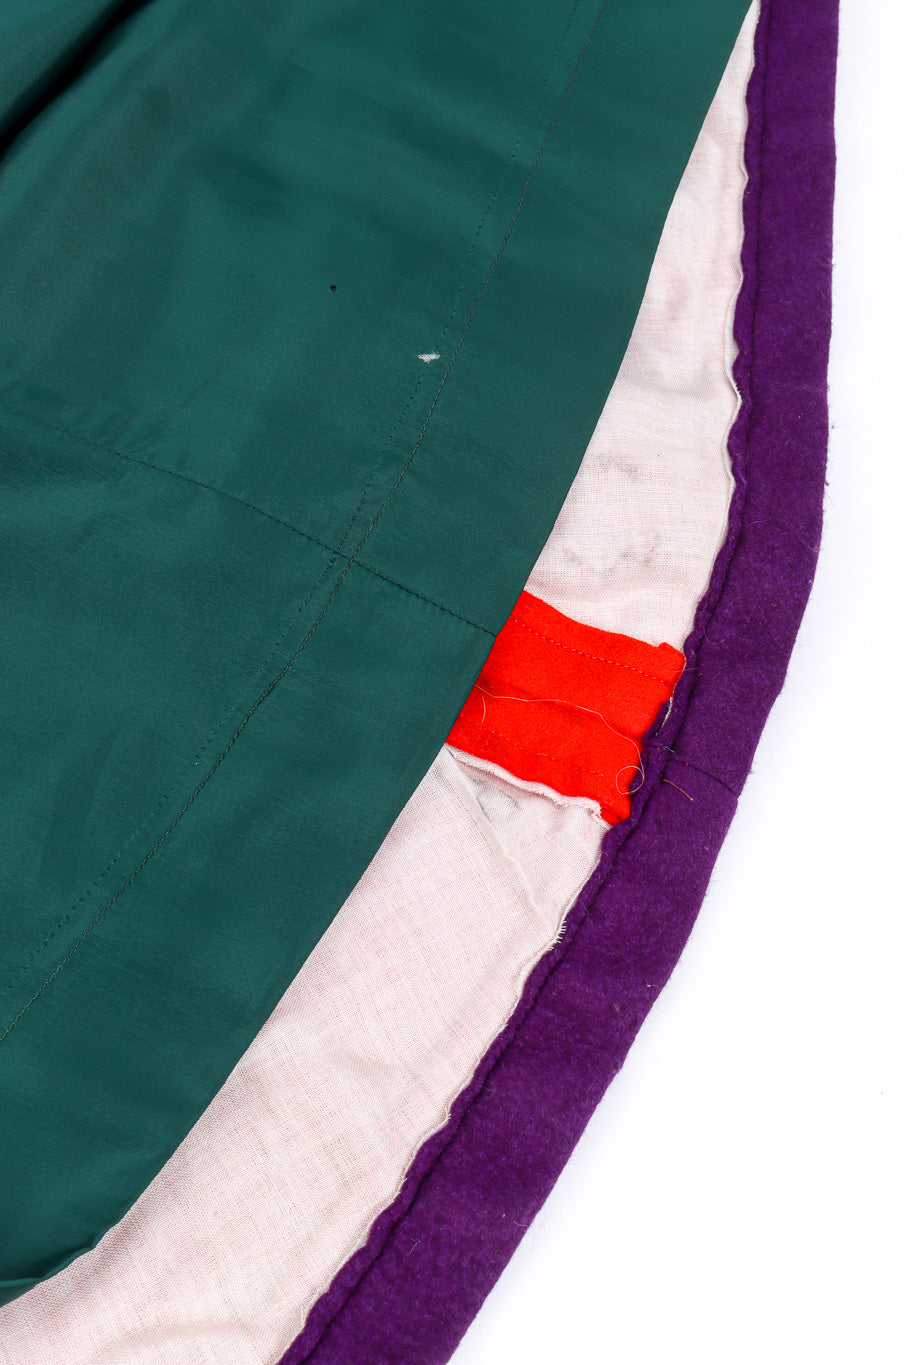 Vintage Malcolm Starr Elephant Maxi Skirt lining hole @recessla